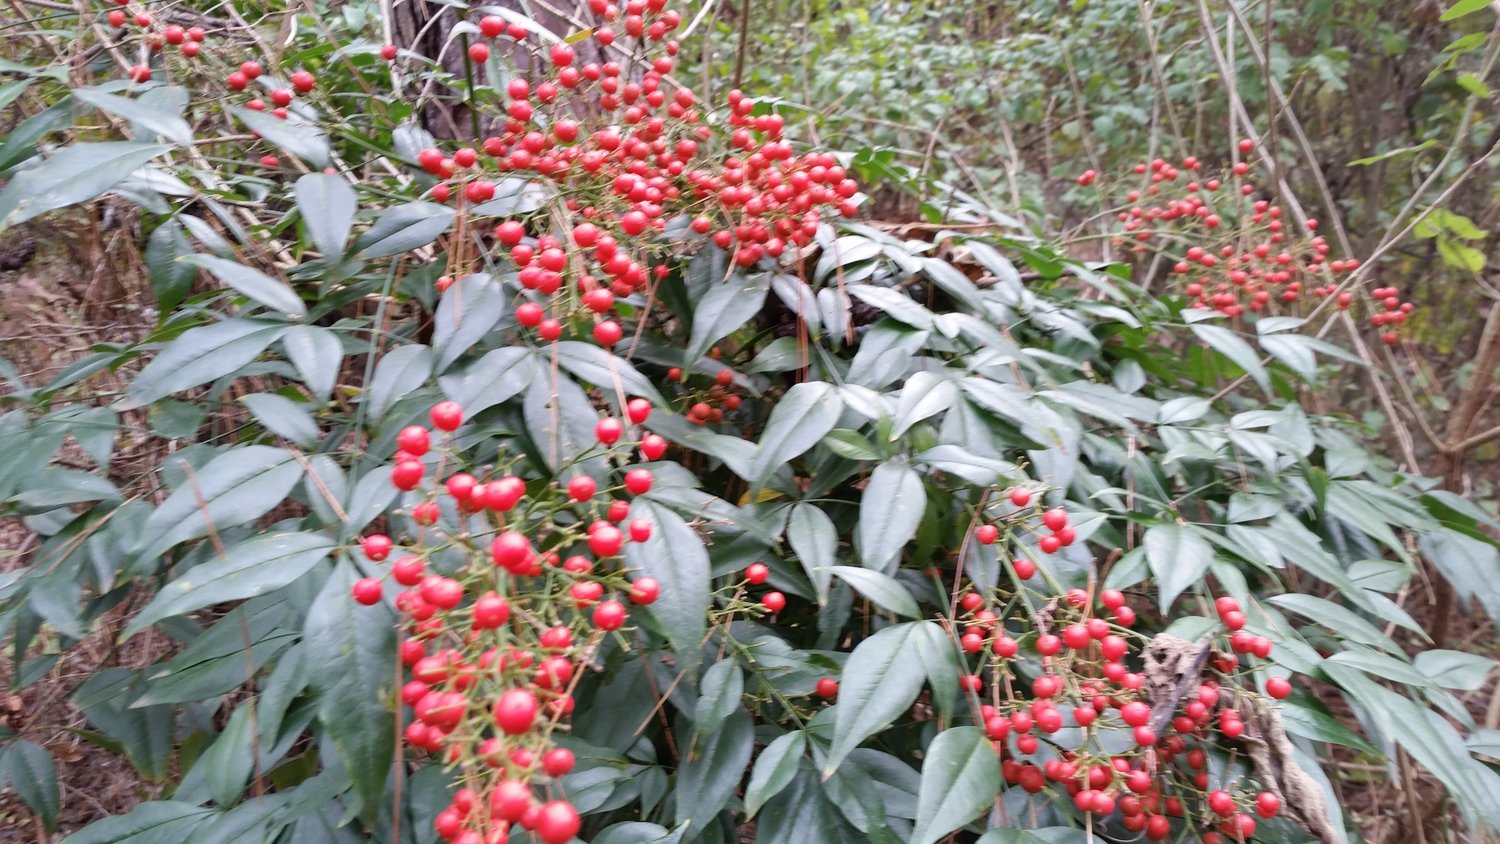 Nandina berries are beautiful but toxic to wildlife.